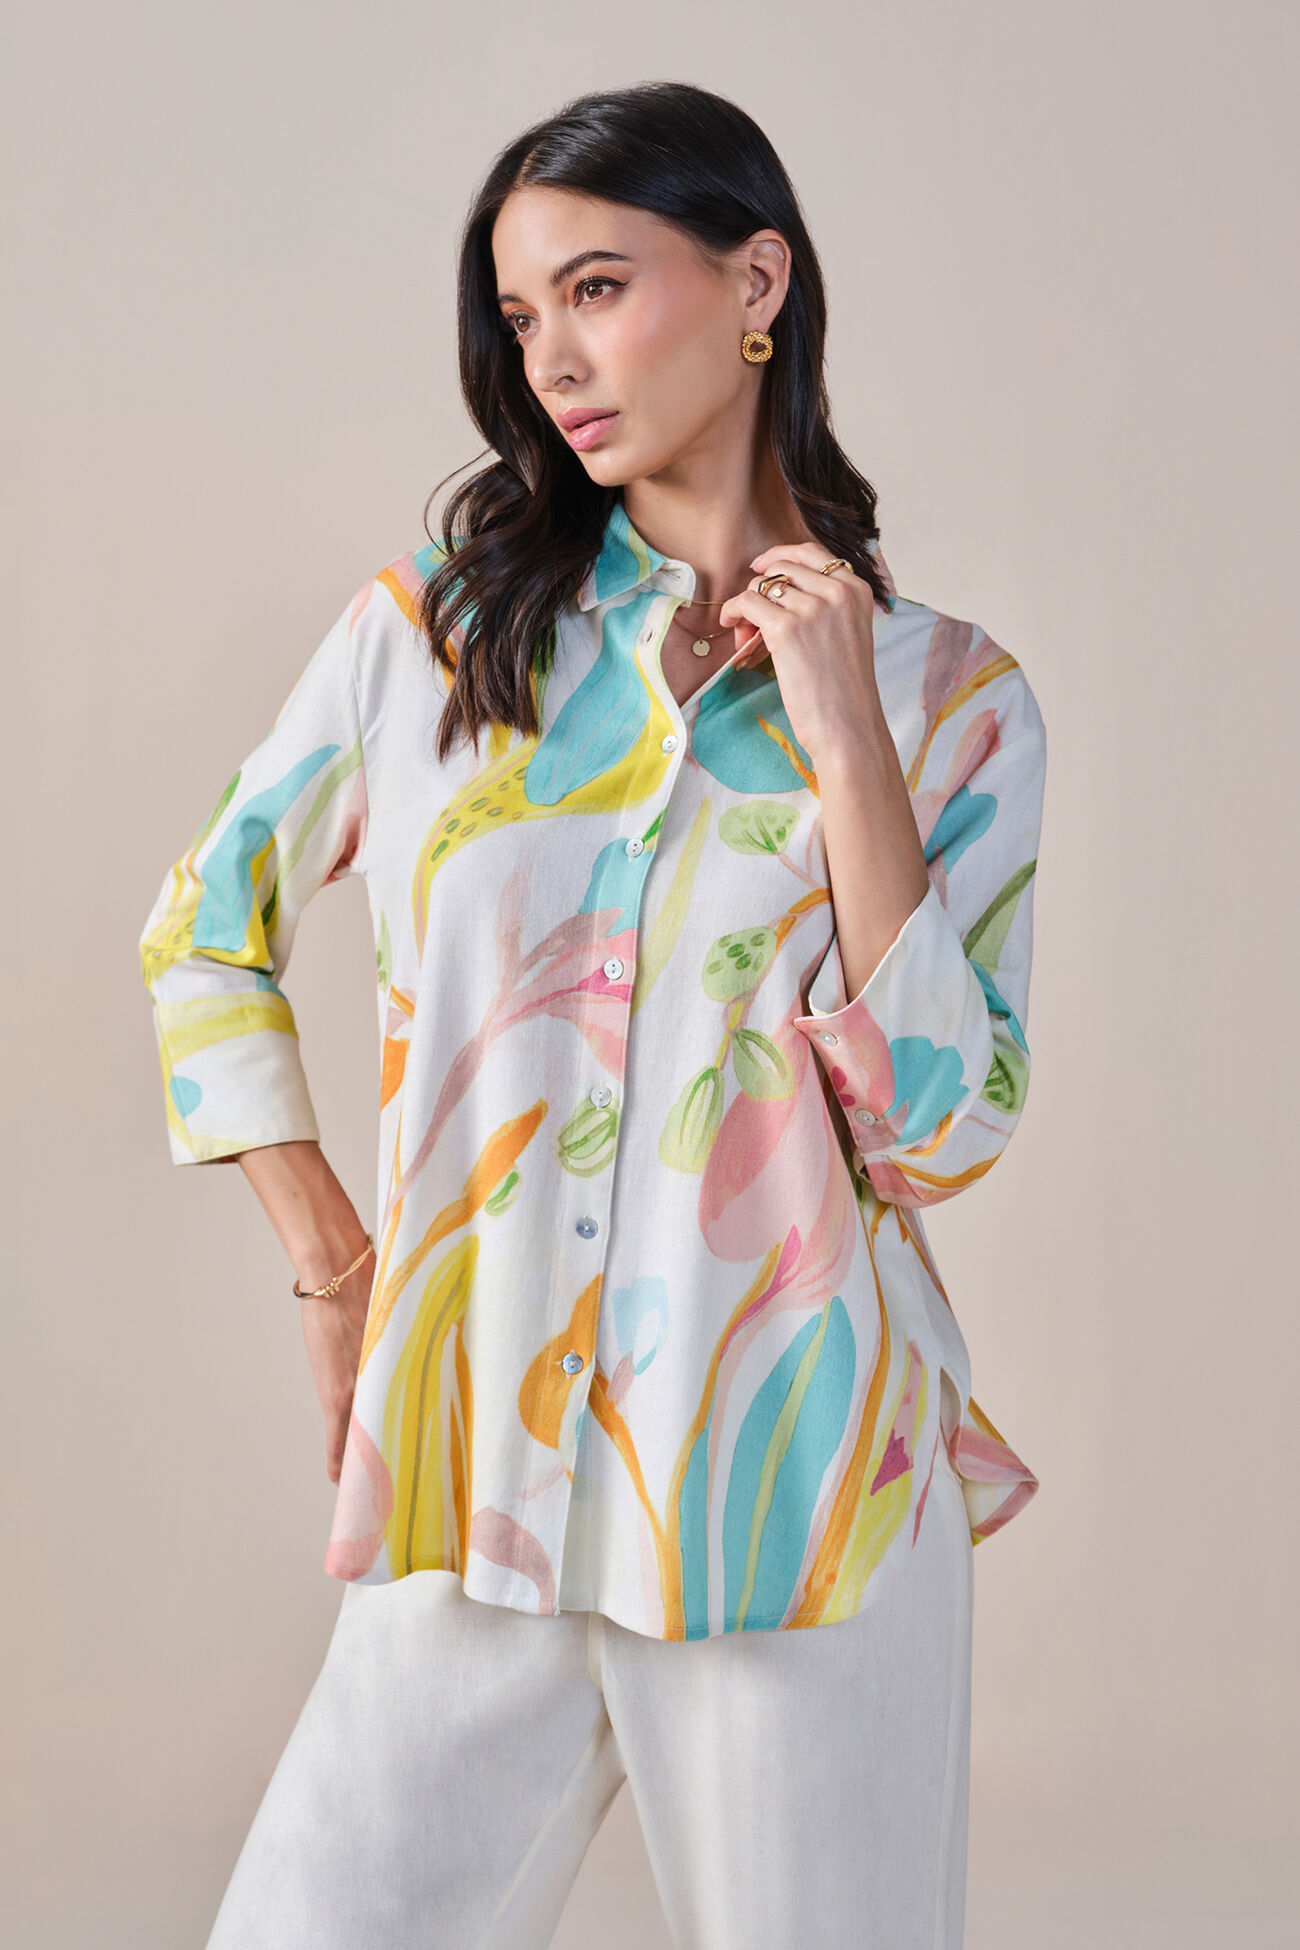 A Floral Summer Viscose Linen Blend Shirt, Multi Color, image 3